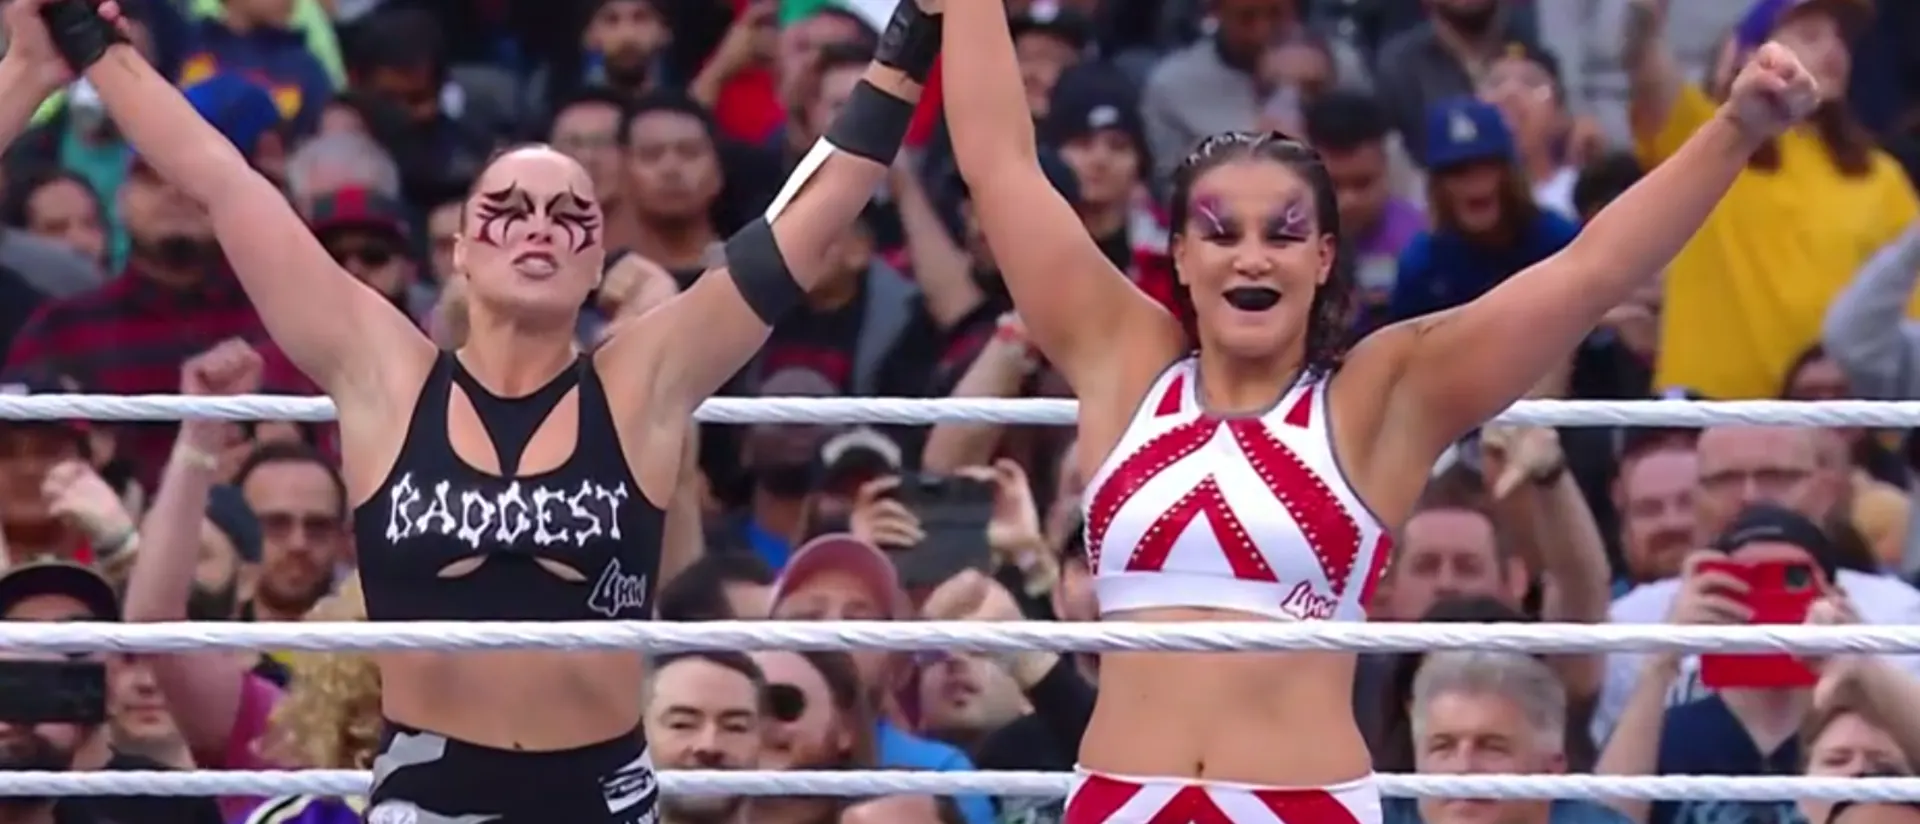 Ronda Rousey and Shayna Baszler win the WrestleMania Showcase Match